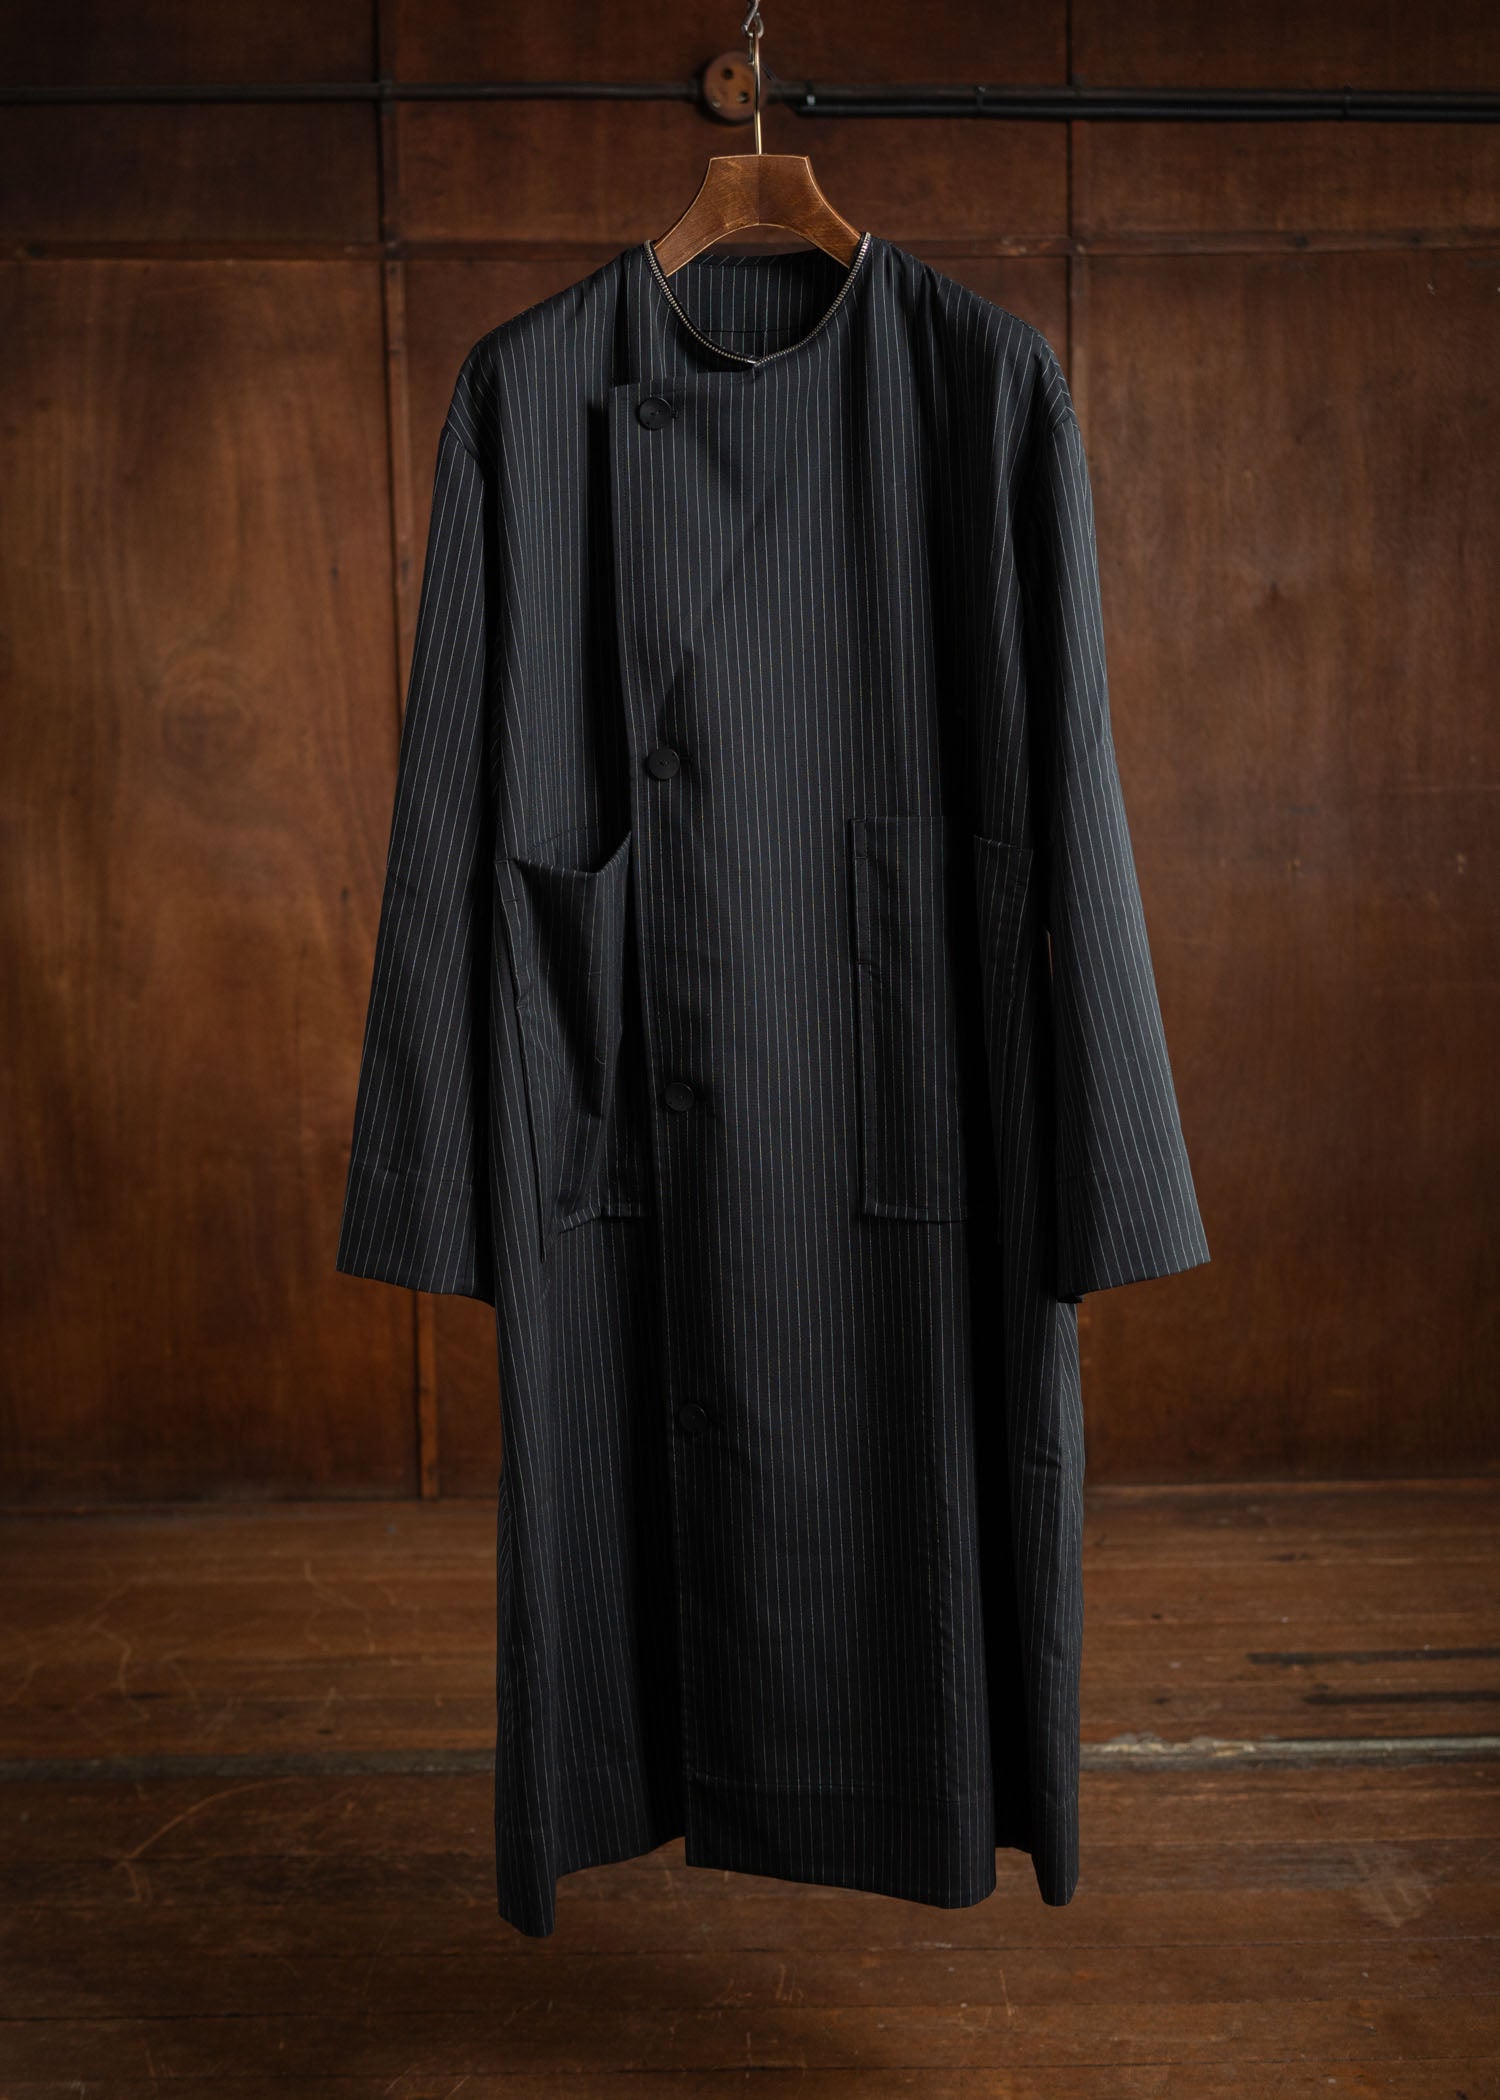 Edwina Horl RE-SET COUTURE Spice coat black stripe